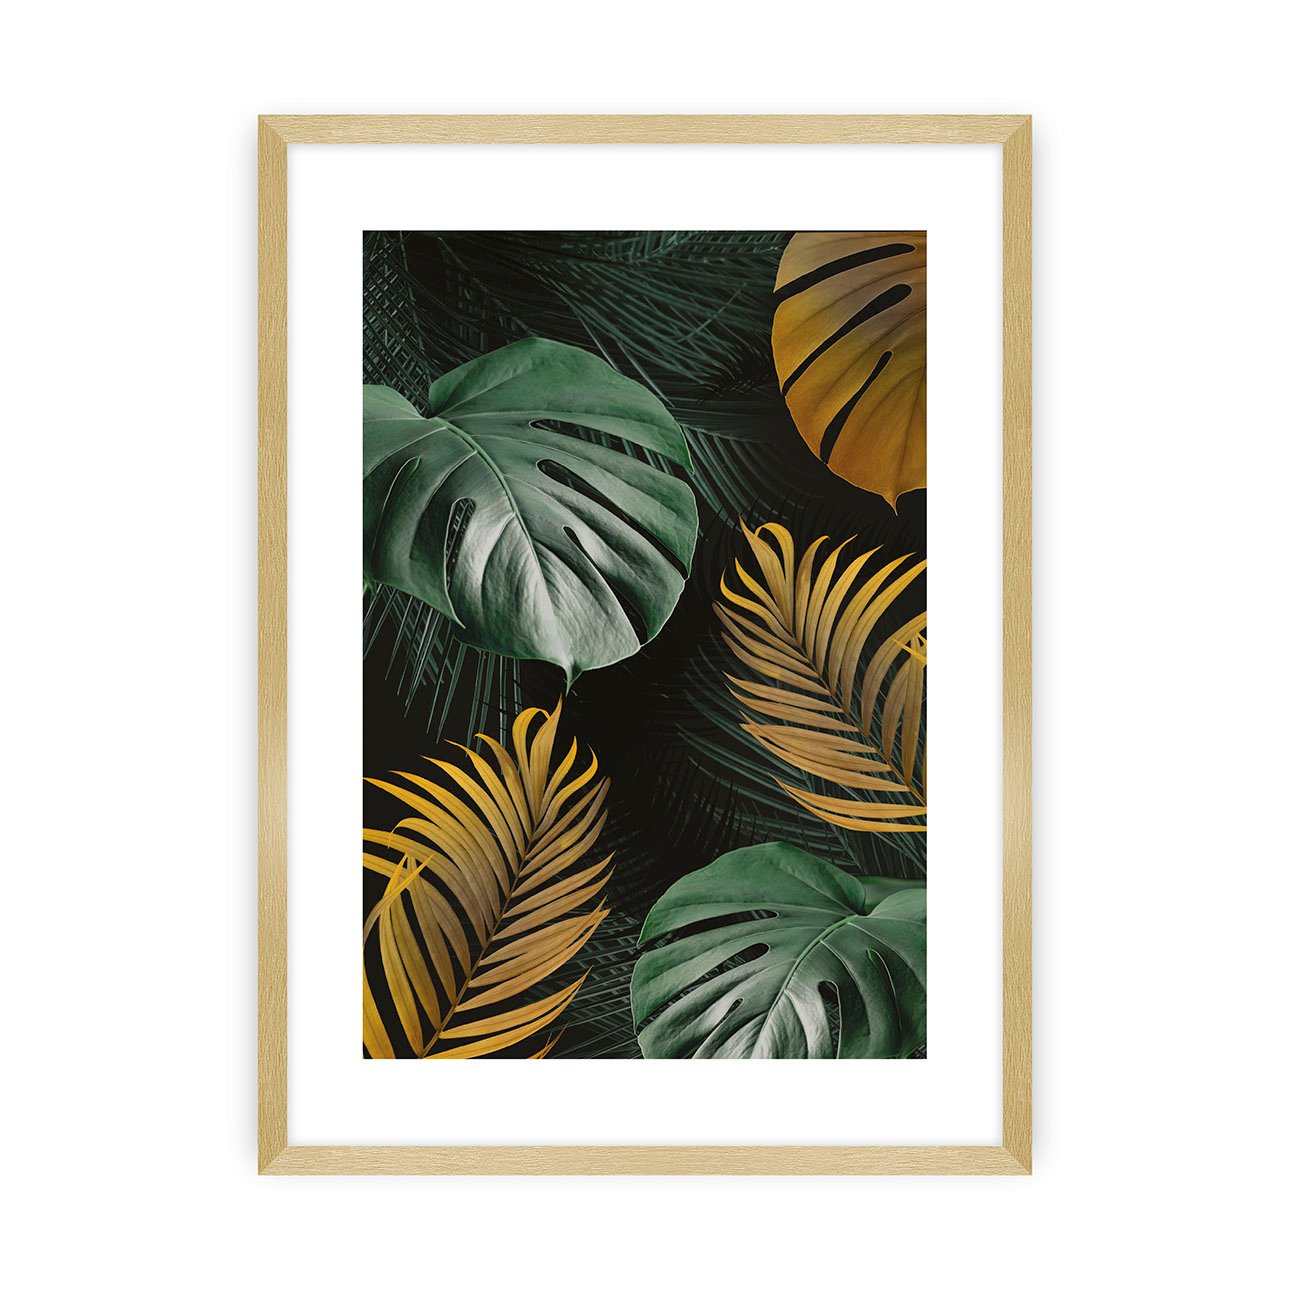 Dekoria Plakat Golden Leaves I, 40 x 50 cm, Ramka: Złota